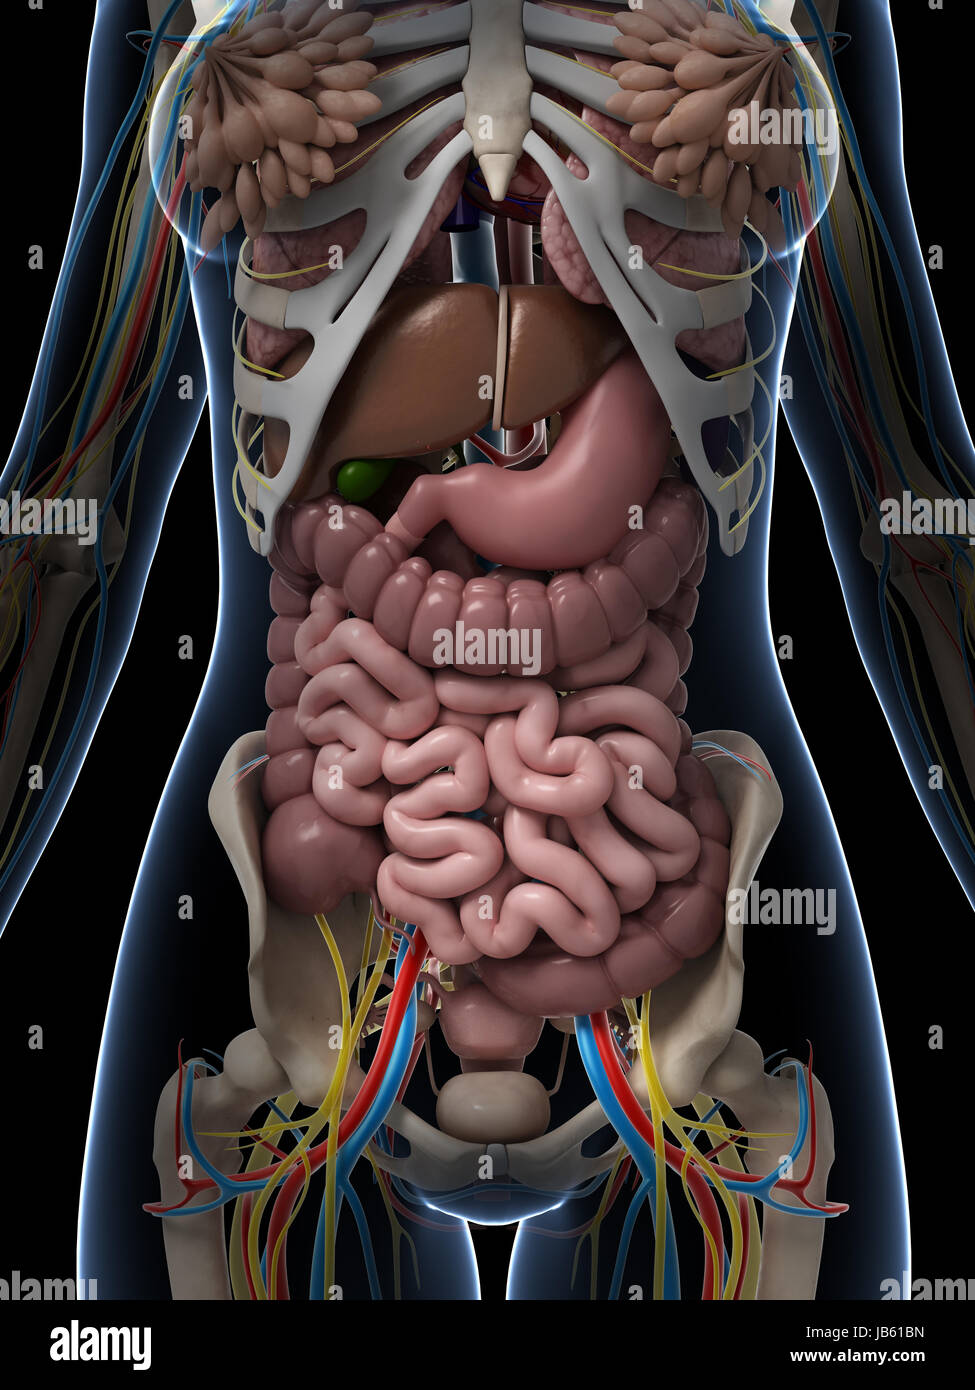 Anatomy Of Internal Organs Female ~ "Female Human Anatomy, Internal